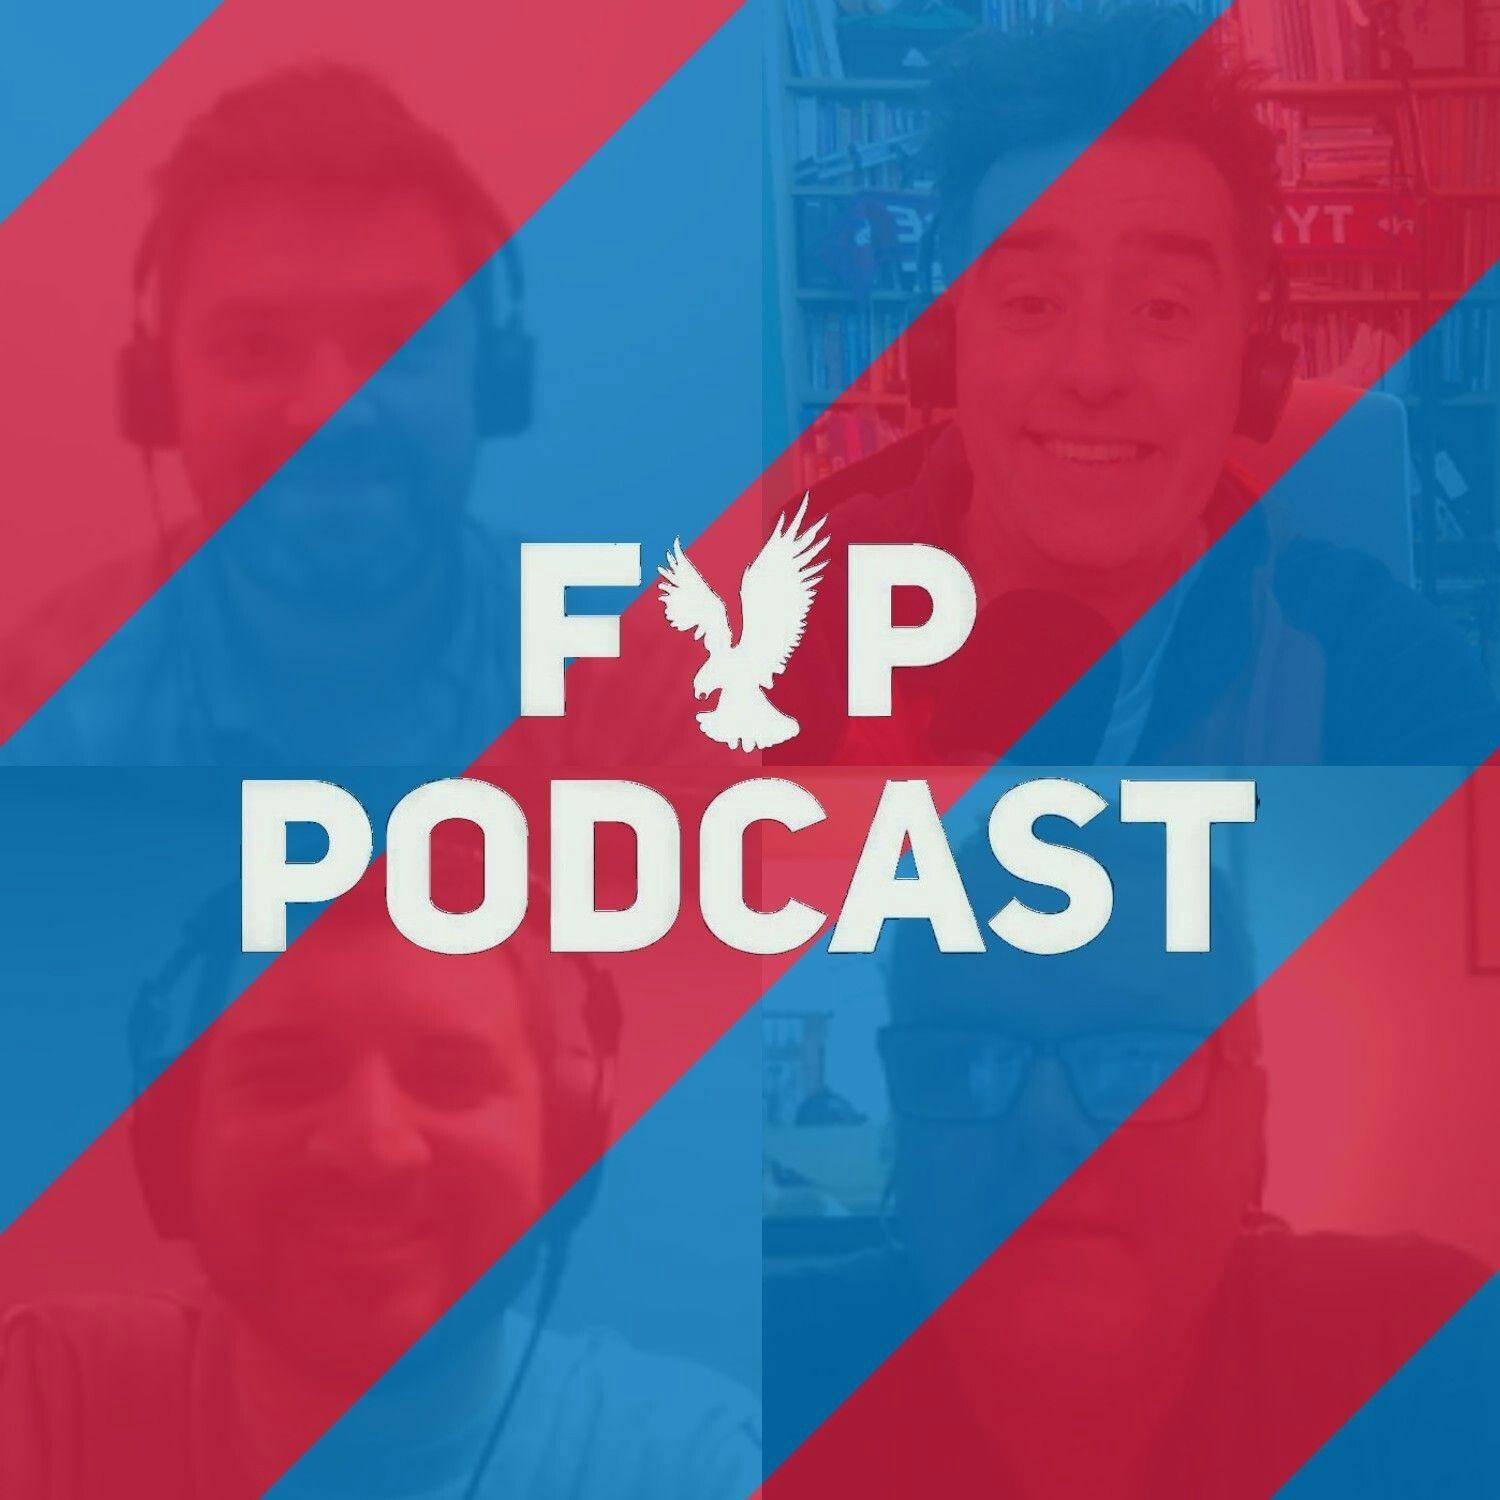 FYP Podcast 467 | A Comfy Old Shoe